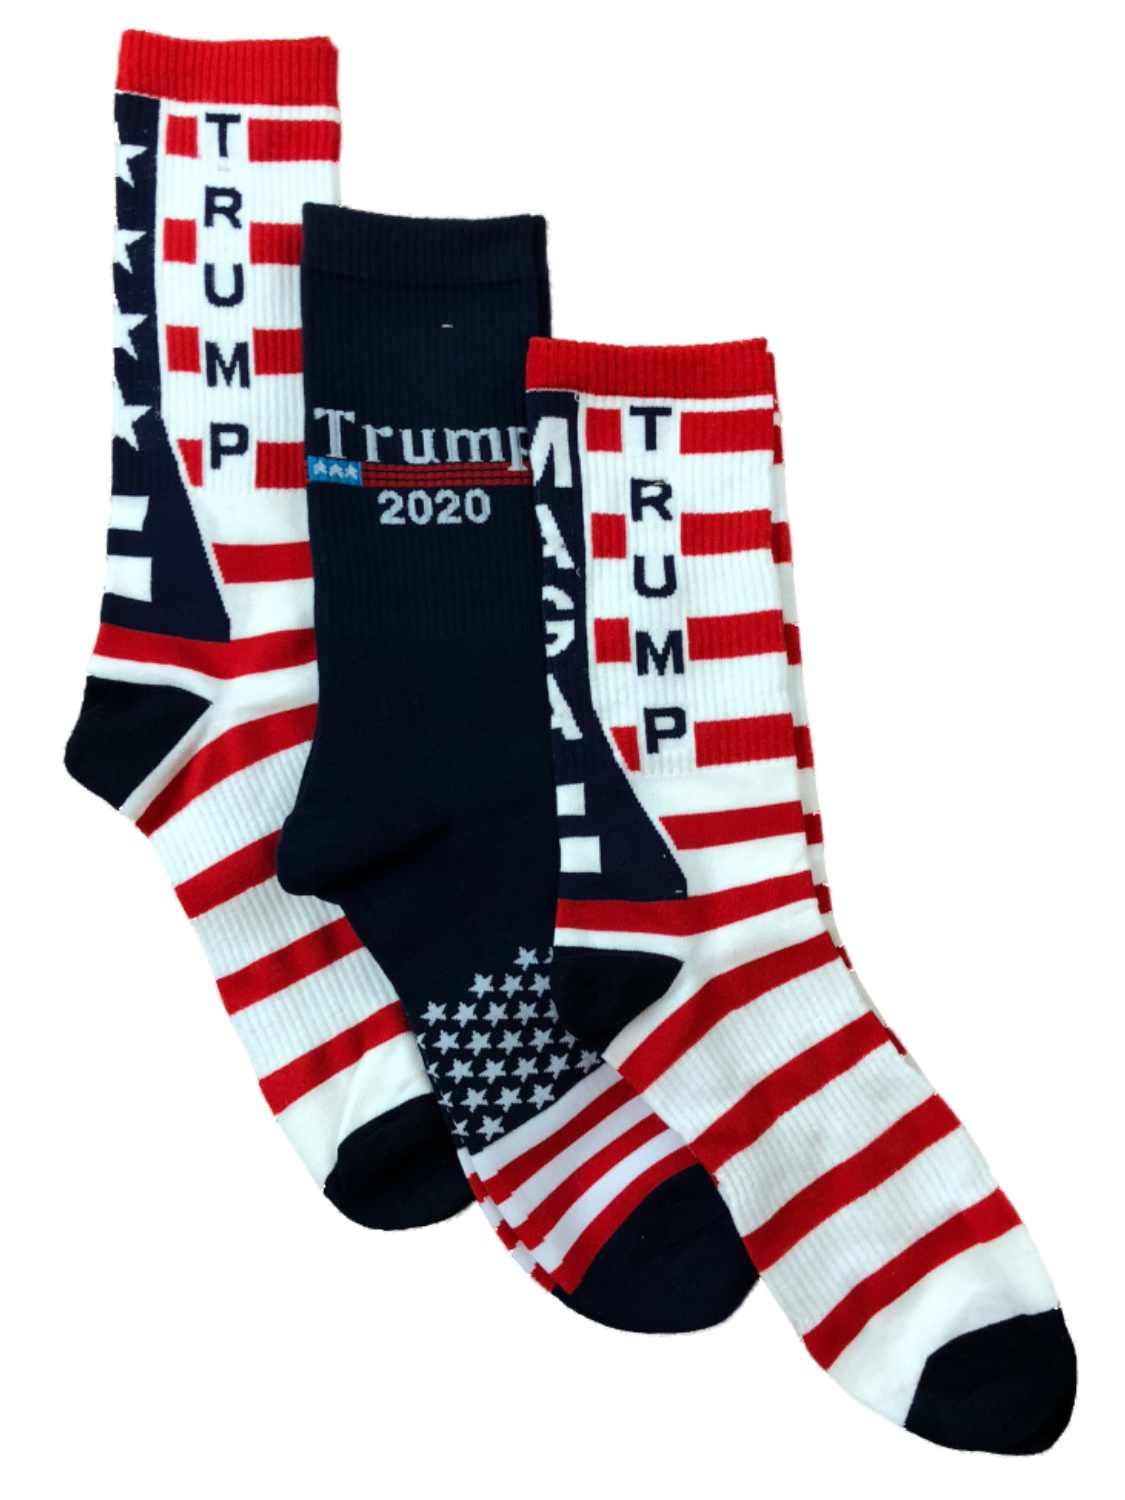 Trump Socks,Trump 2020 Dress Socks,Make America Great Again USA Socks 